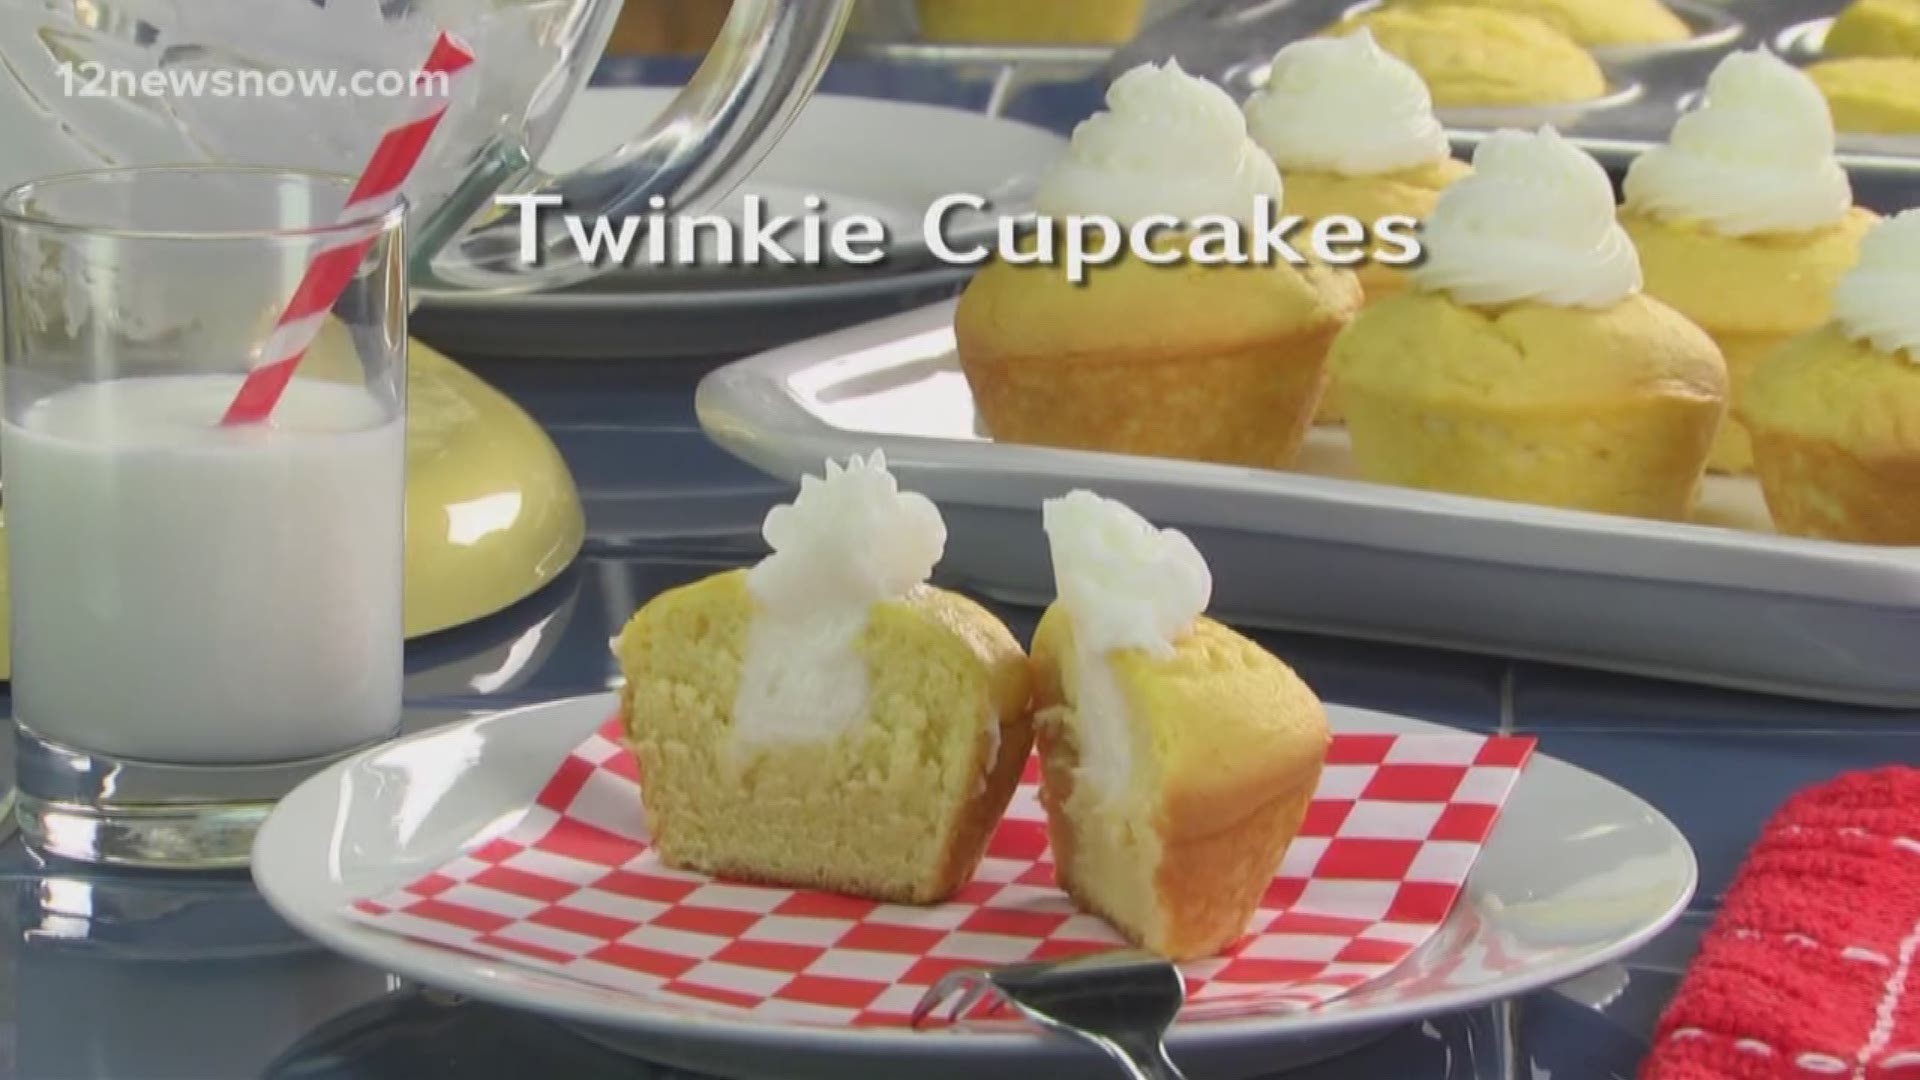 Mr. Food makes Twinkies with a twist